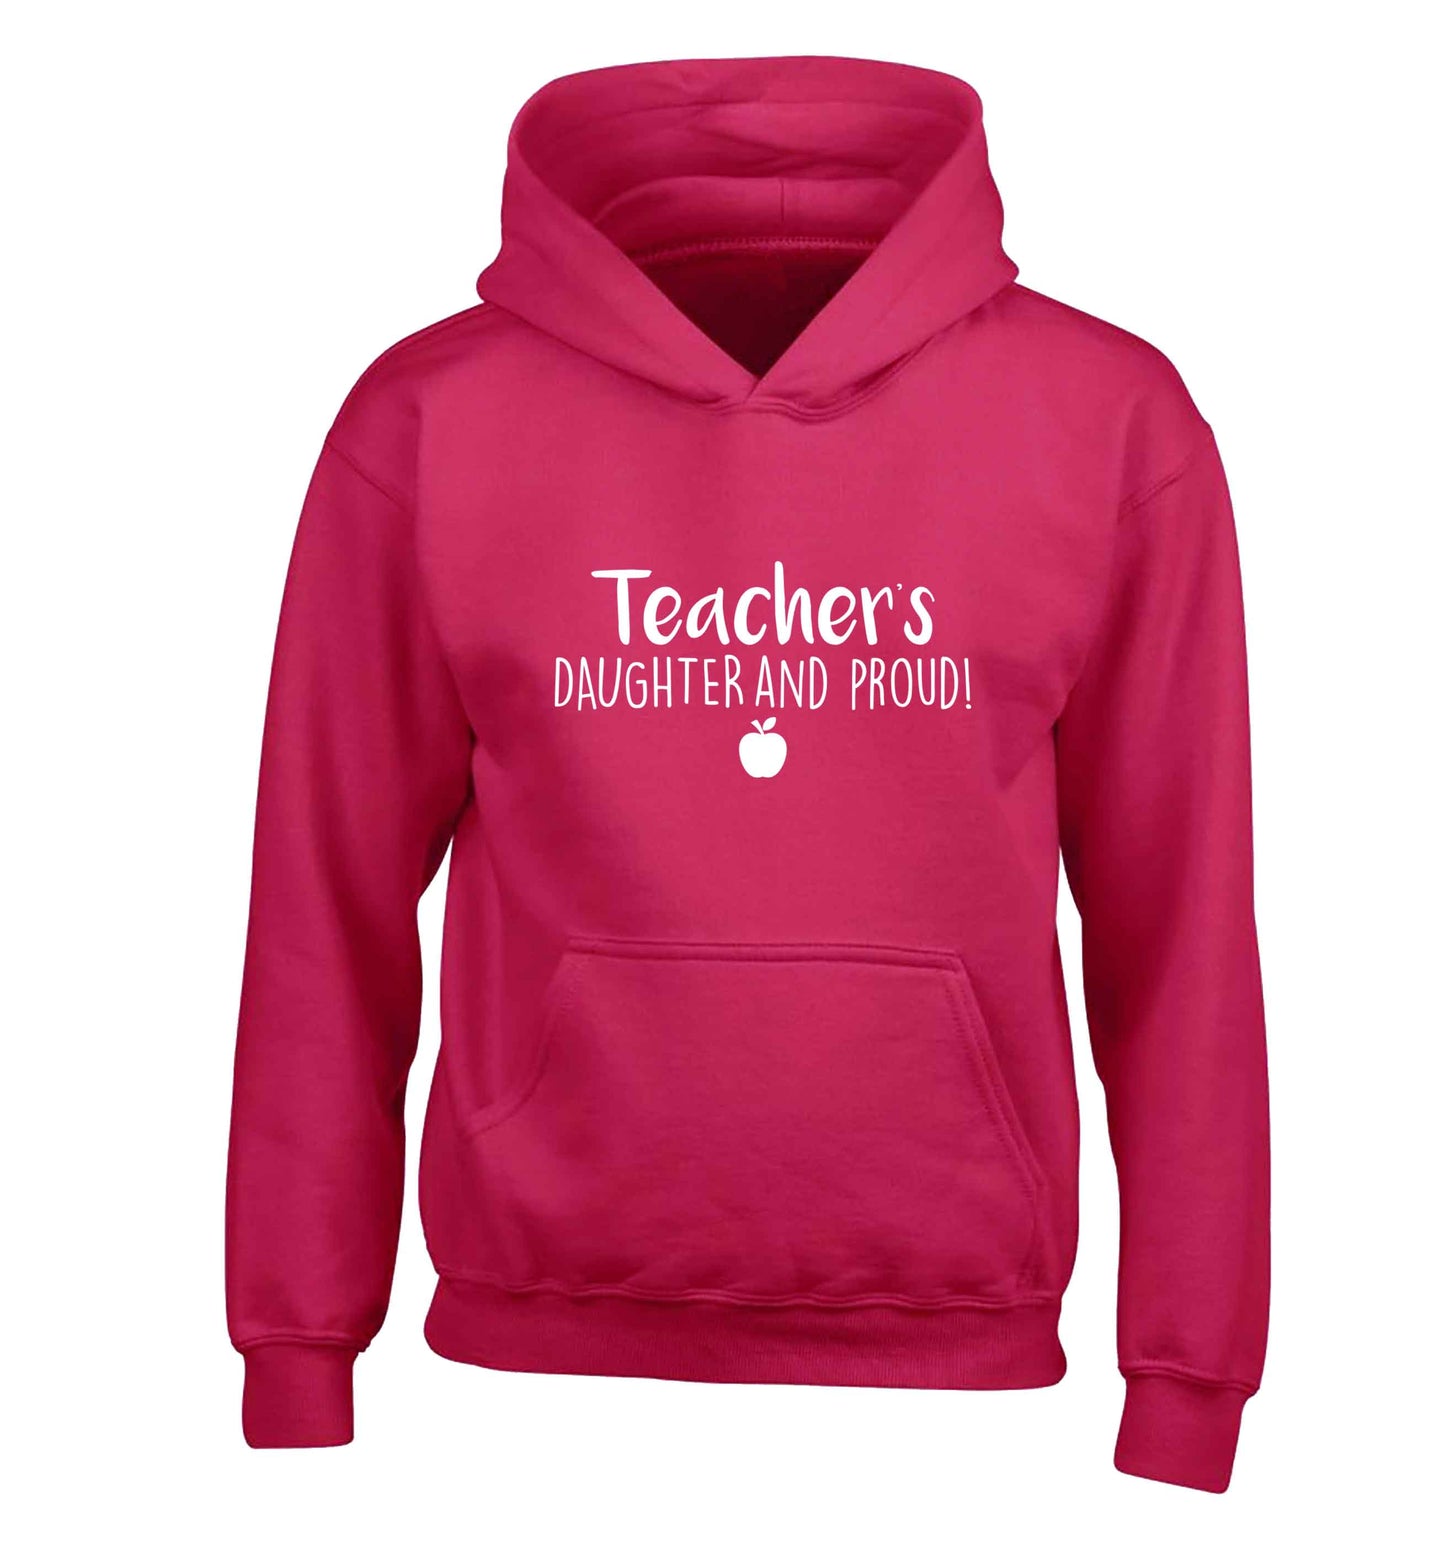 Teachers daughter and proud children's pink hoodie 12-13 Years